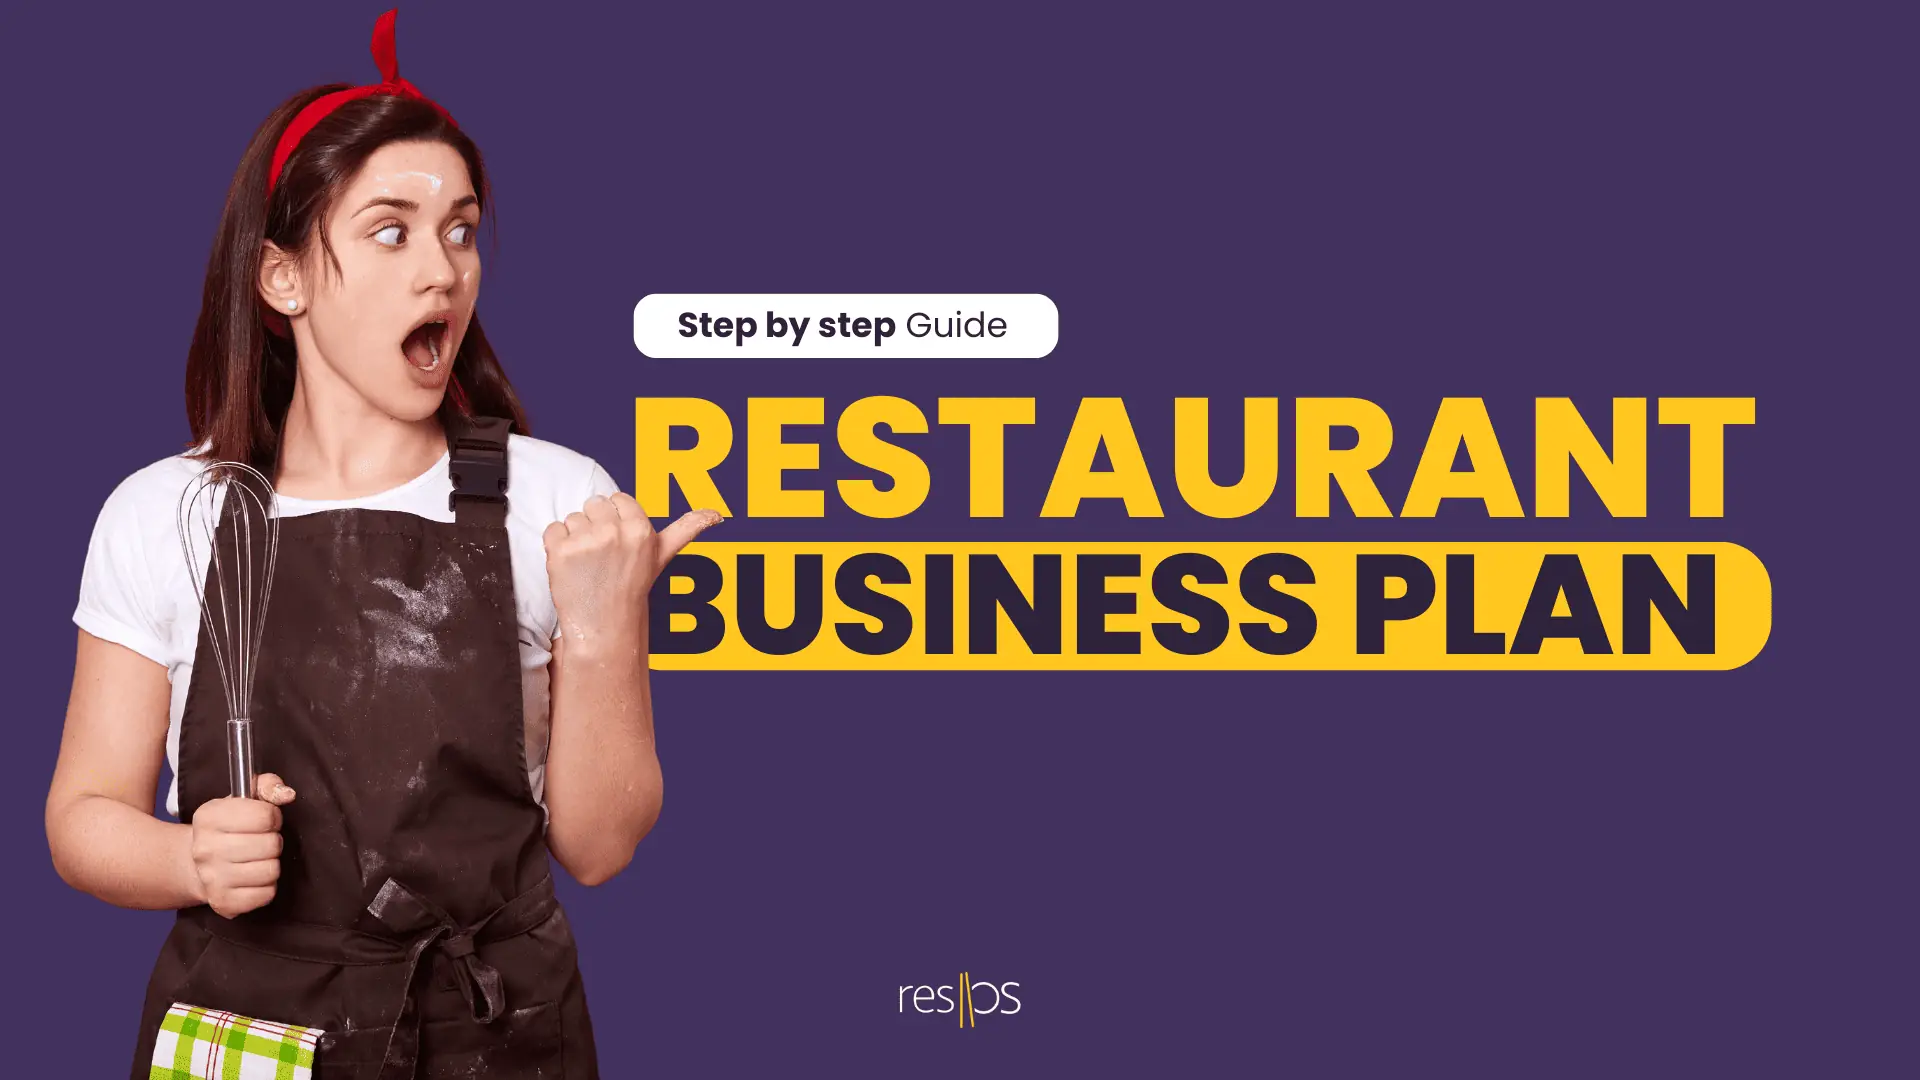 example business plan restaurant